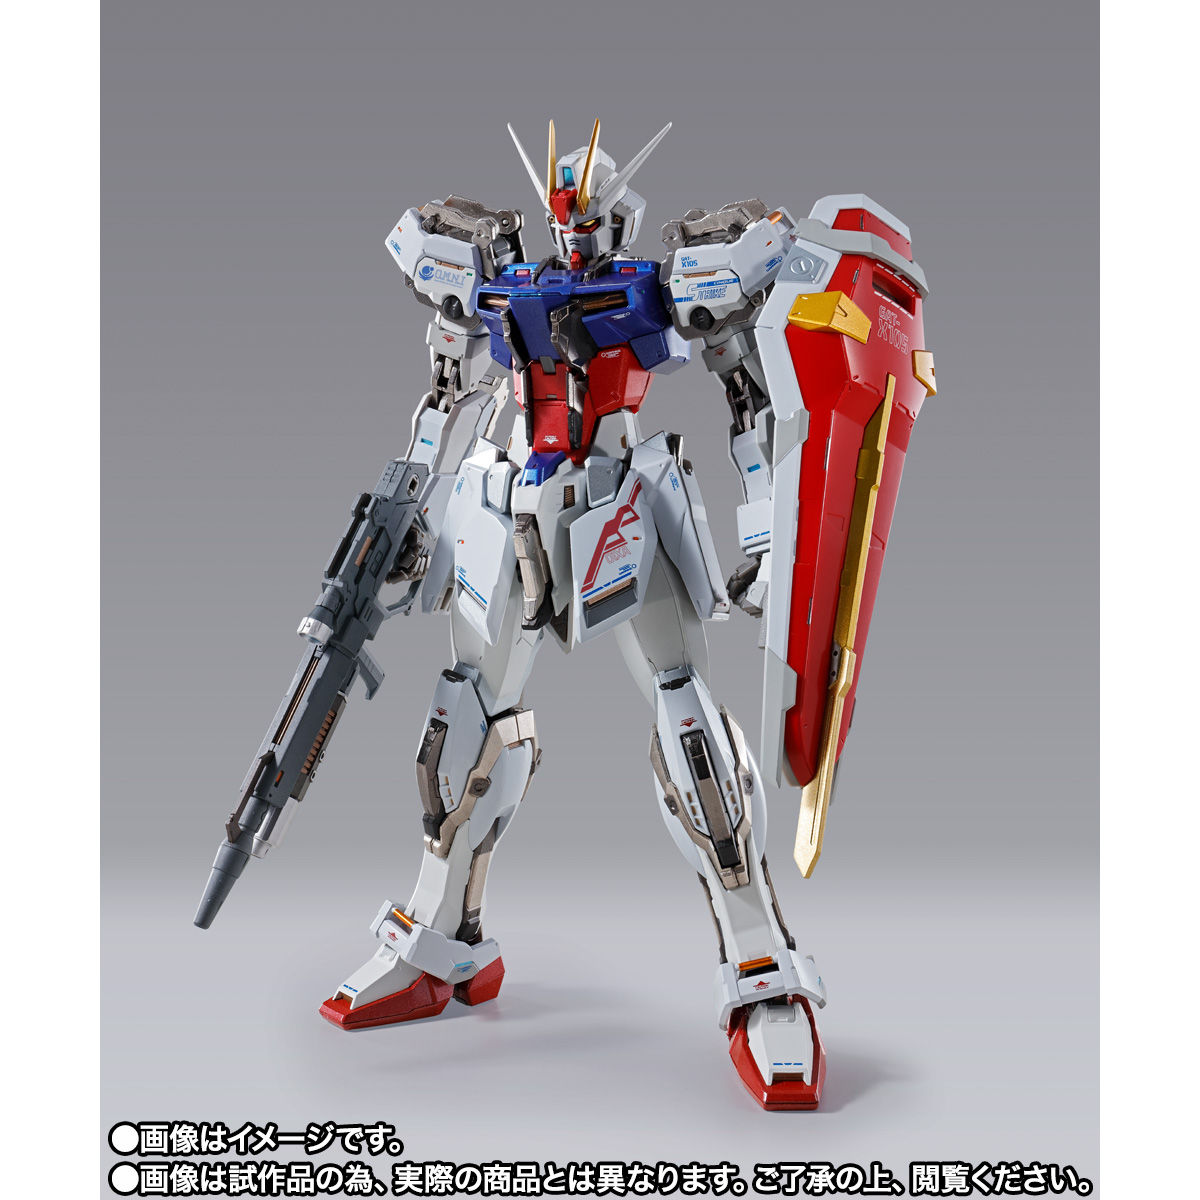 Metal Build GAT-X105 Strike Gundam(Metal Build 10th Anniversary Limited Package)